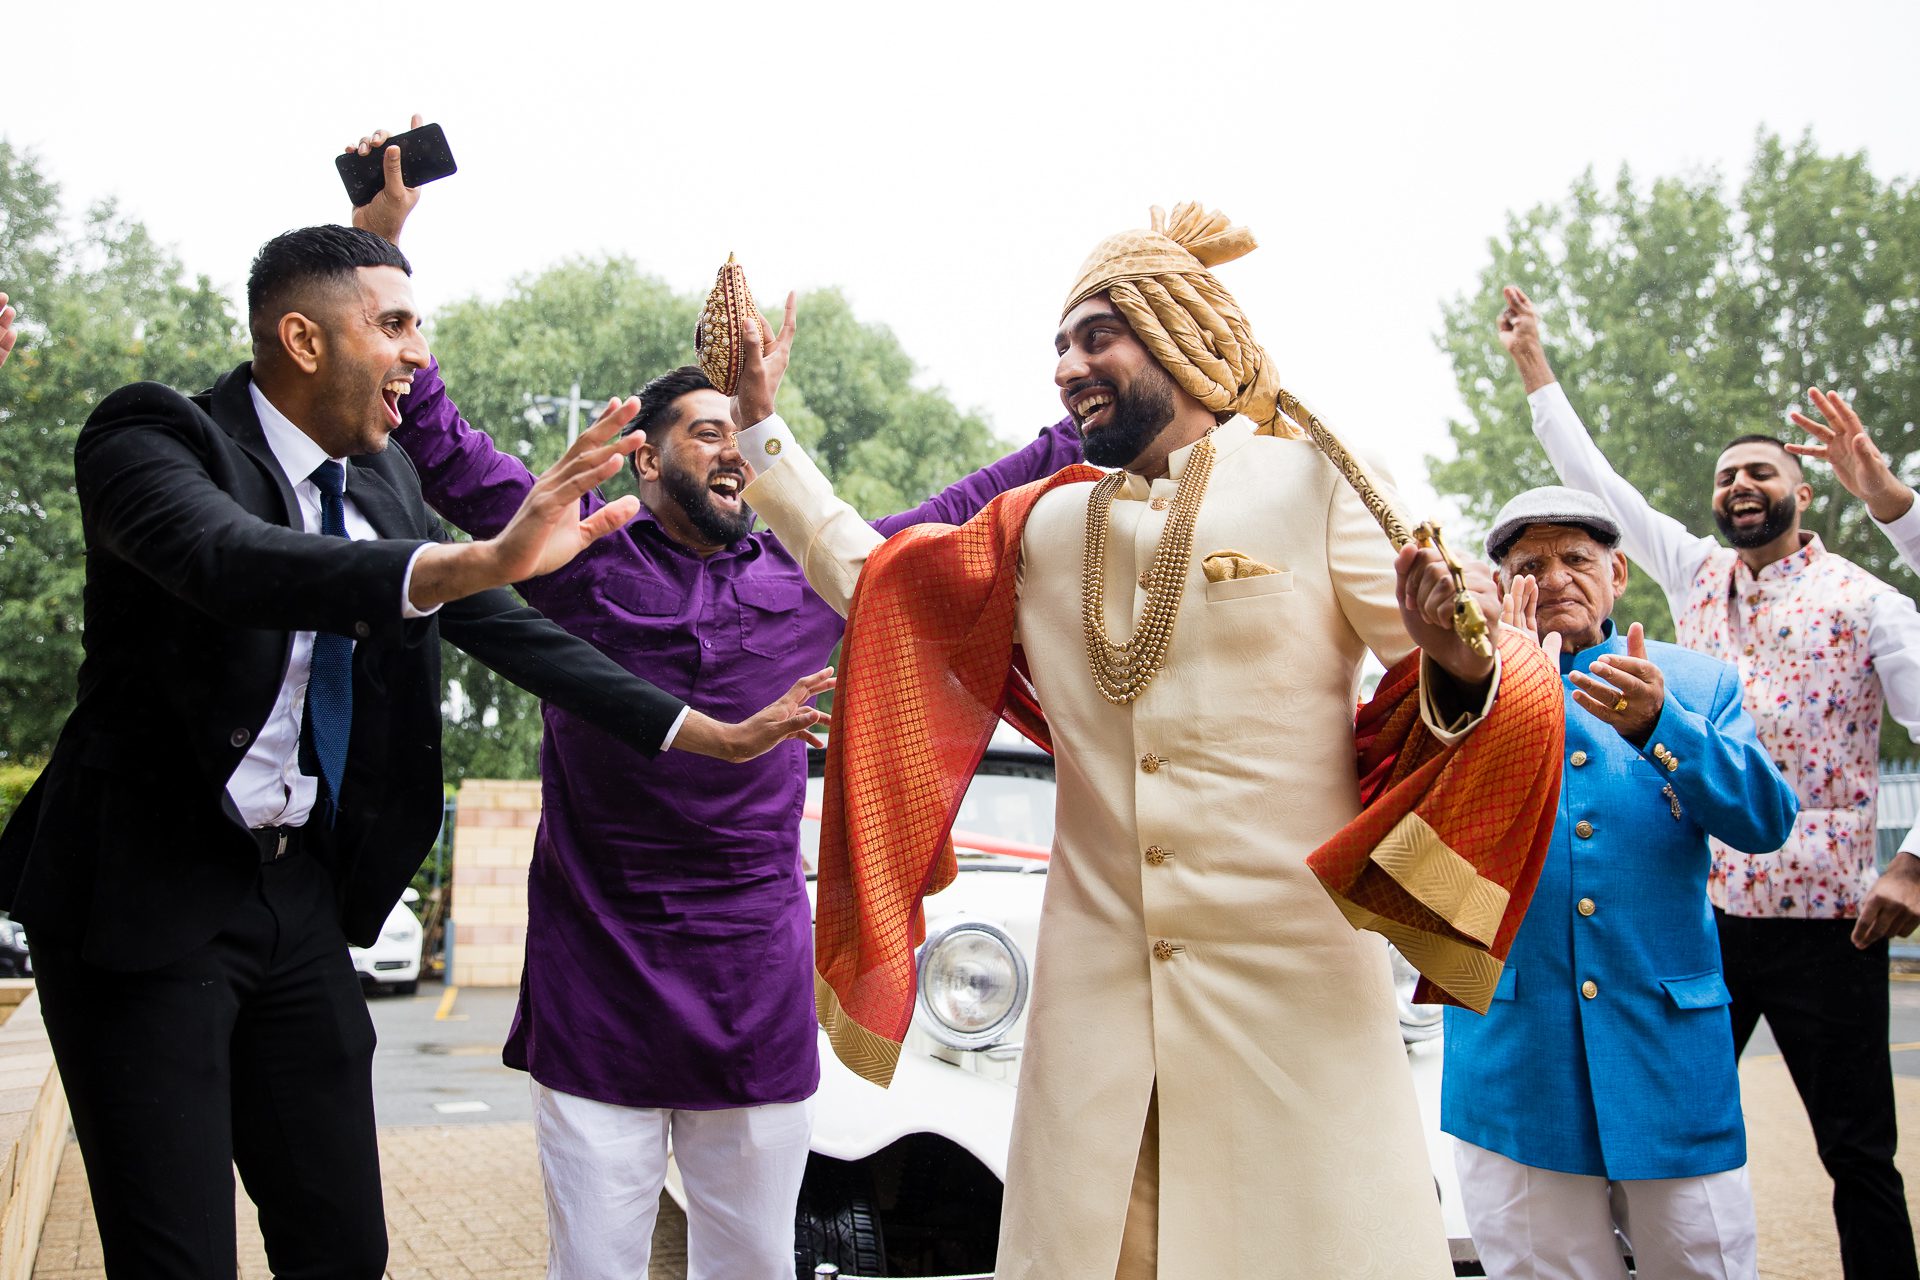 Arrival of asian wedding groom